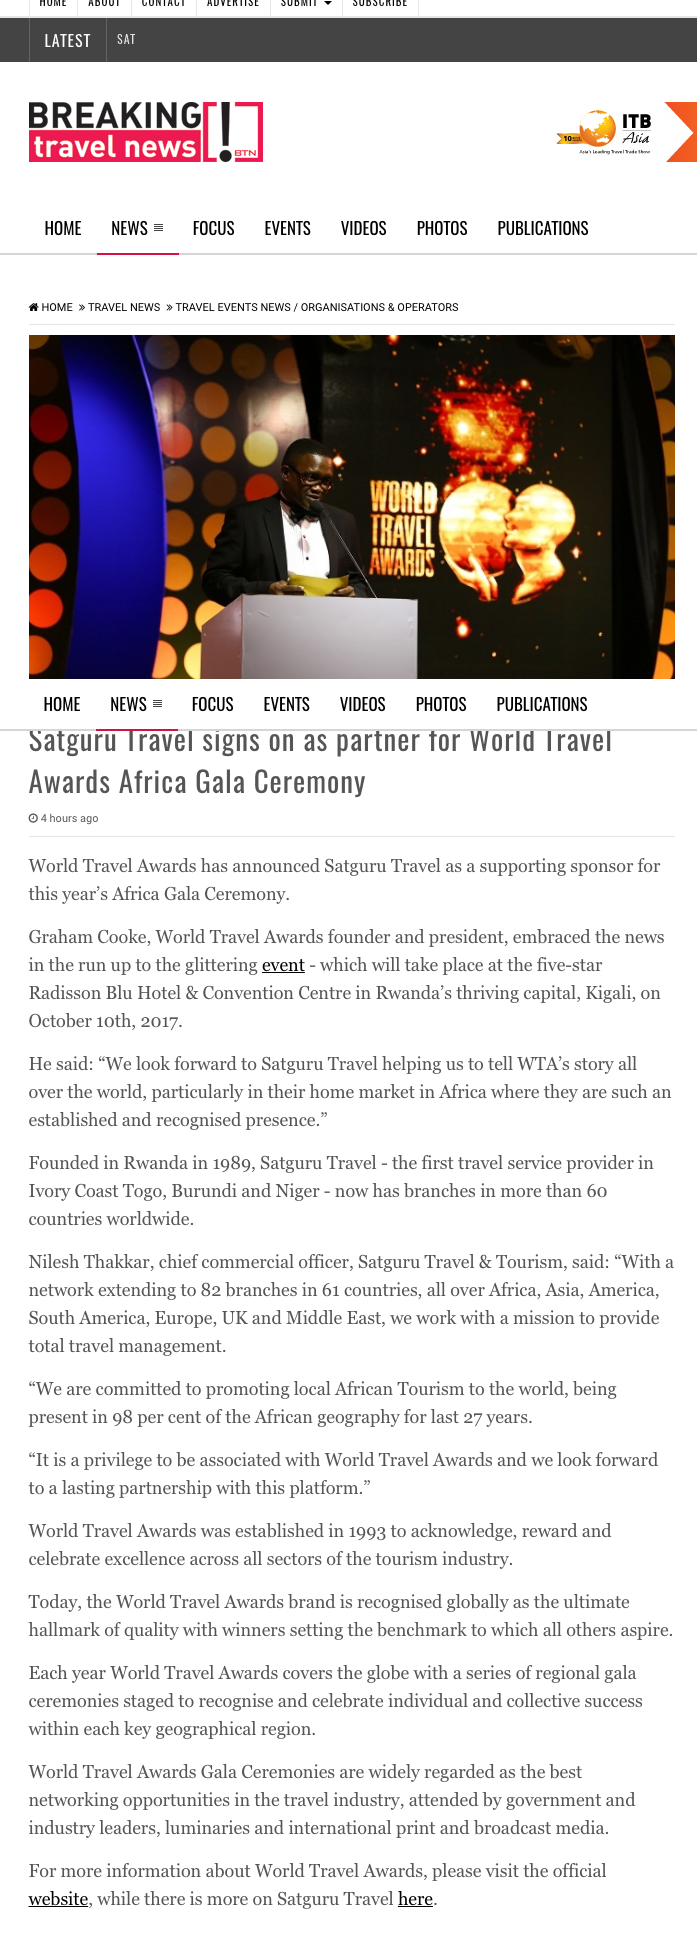 Satguru Travel signs on as partner for World Travel Awards Africa Gala Ceremony